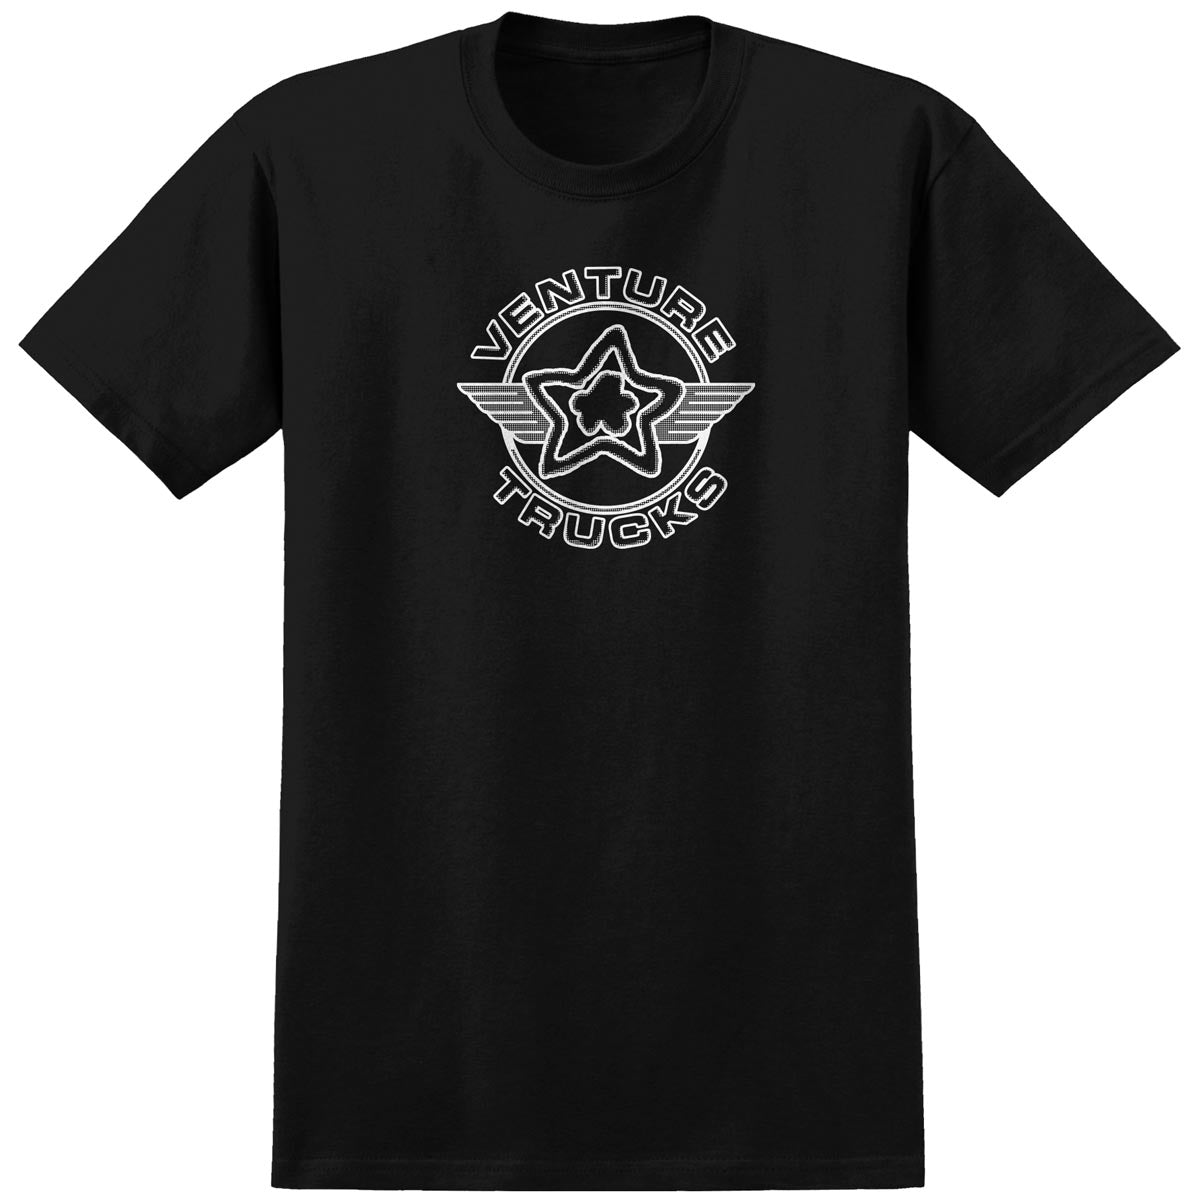 Venture Star Team T-Shirt - Black image 1